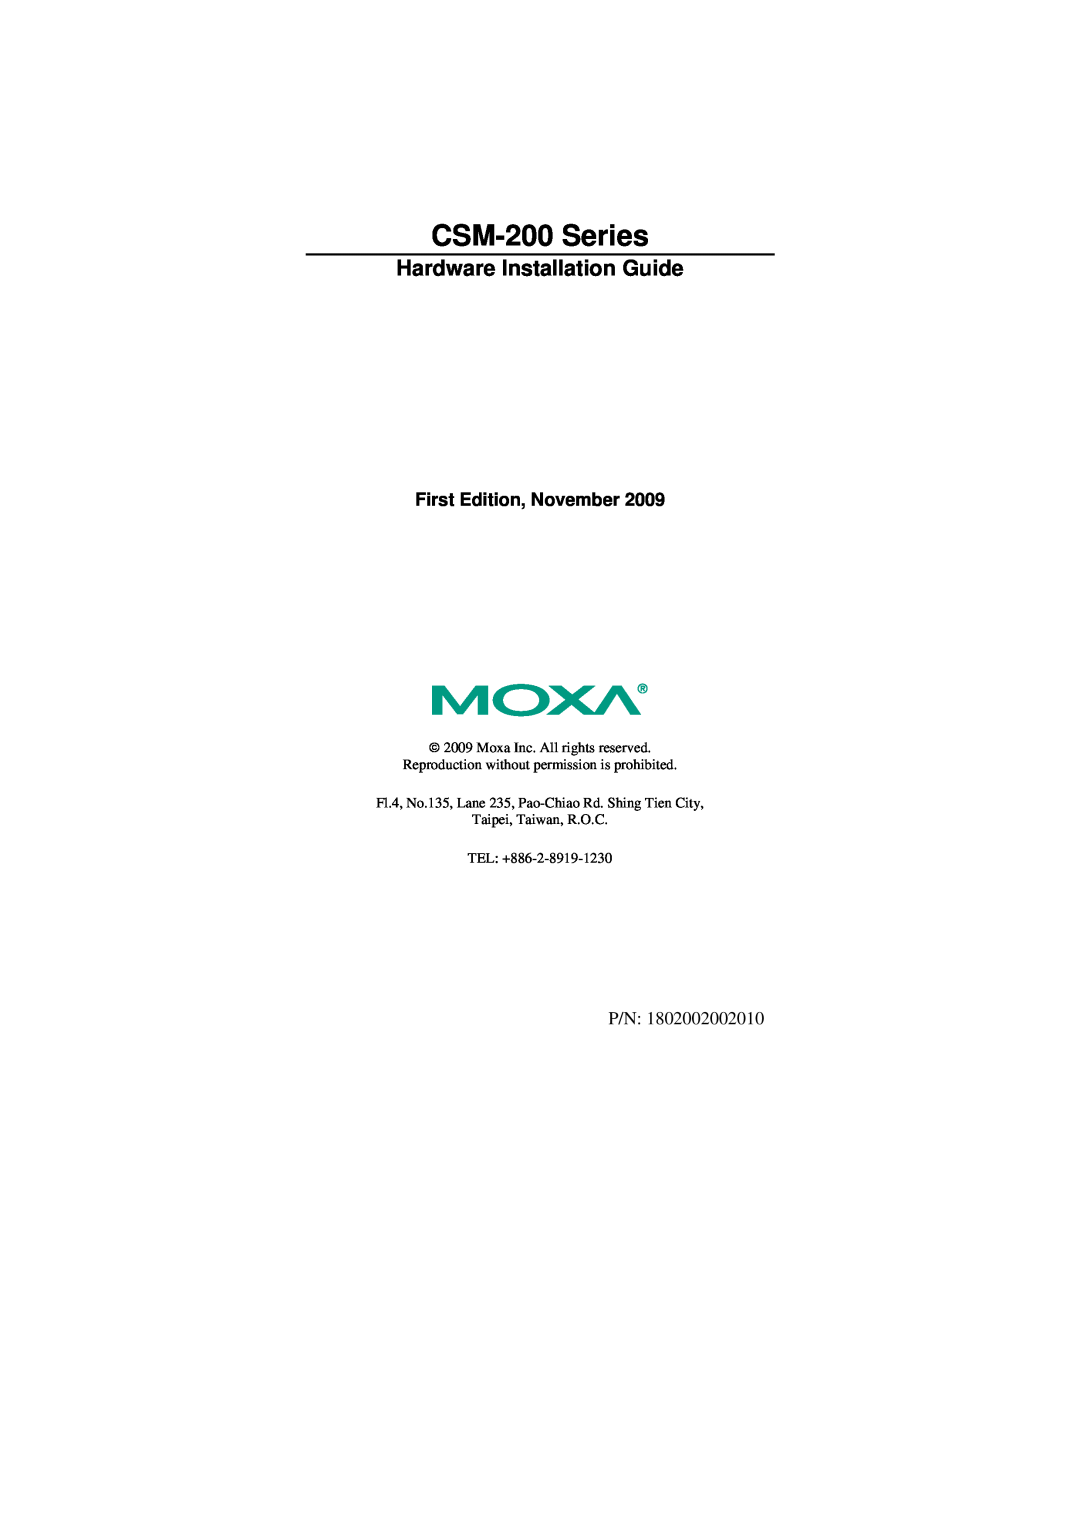 Moxa Technologies CSM 200 manual CSM-200 Series, Hardware Installation Guide, First Edition, November 